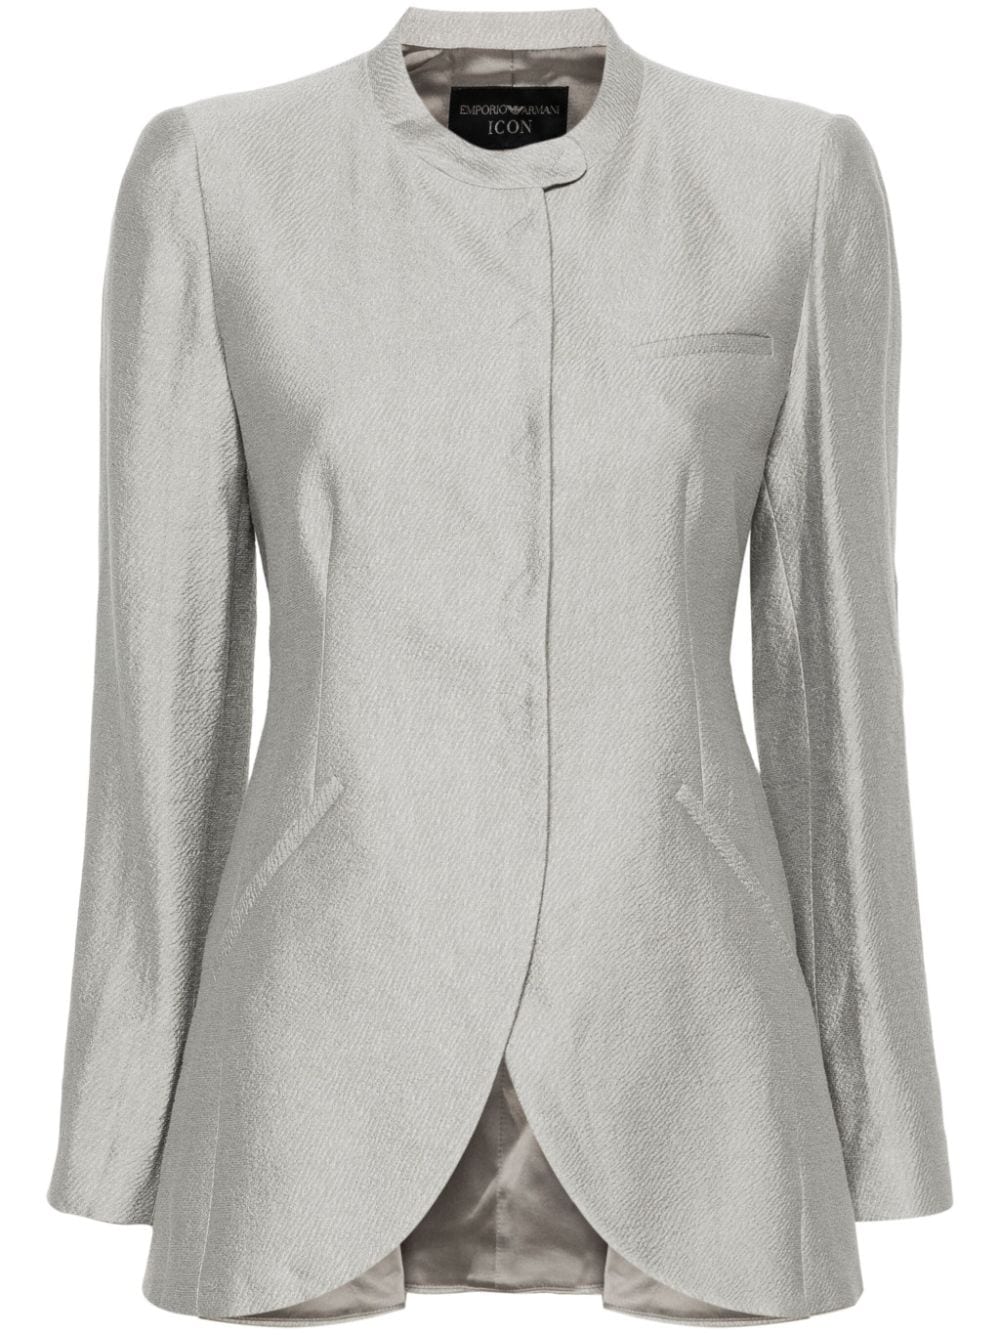 EMPORIO ARMANI Heather Grey Textured Blazer Jacket with Button Detailing & Dart Accents for Women